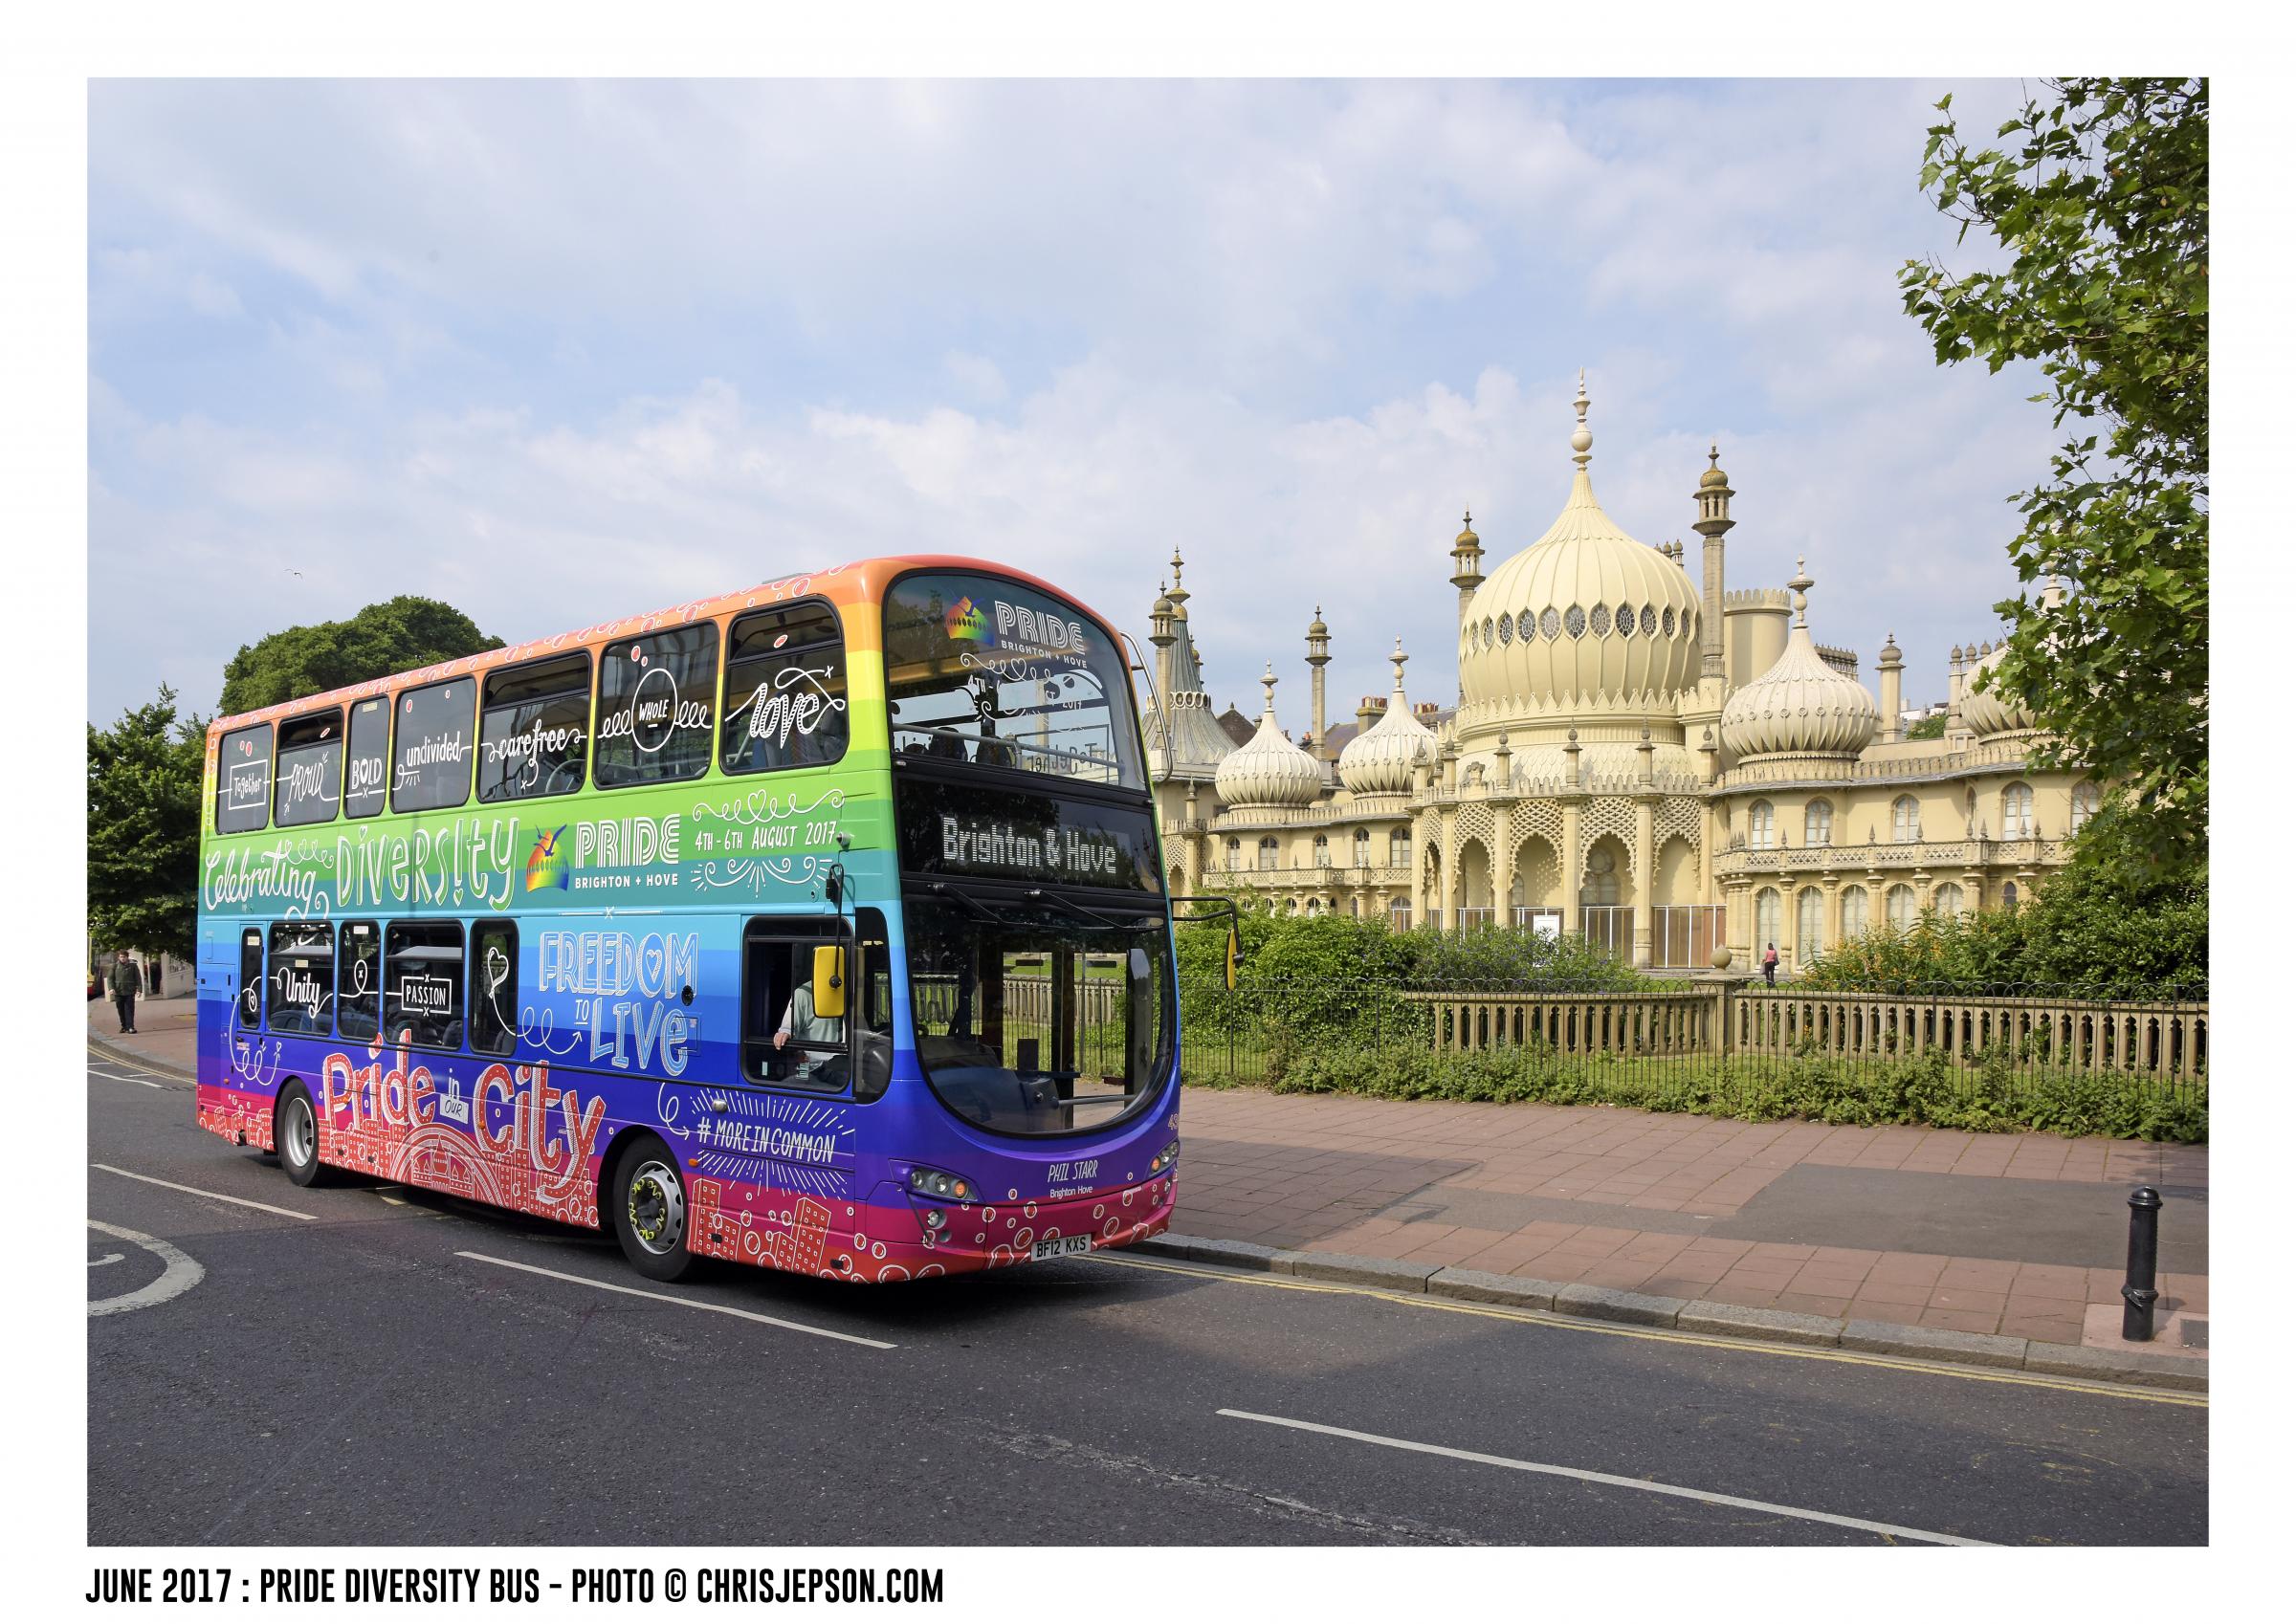 Rainbow coloured bus hits streets ahead of Pride festival